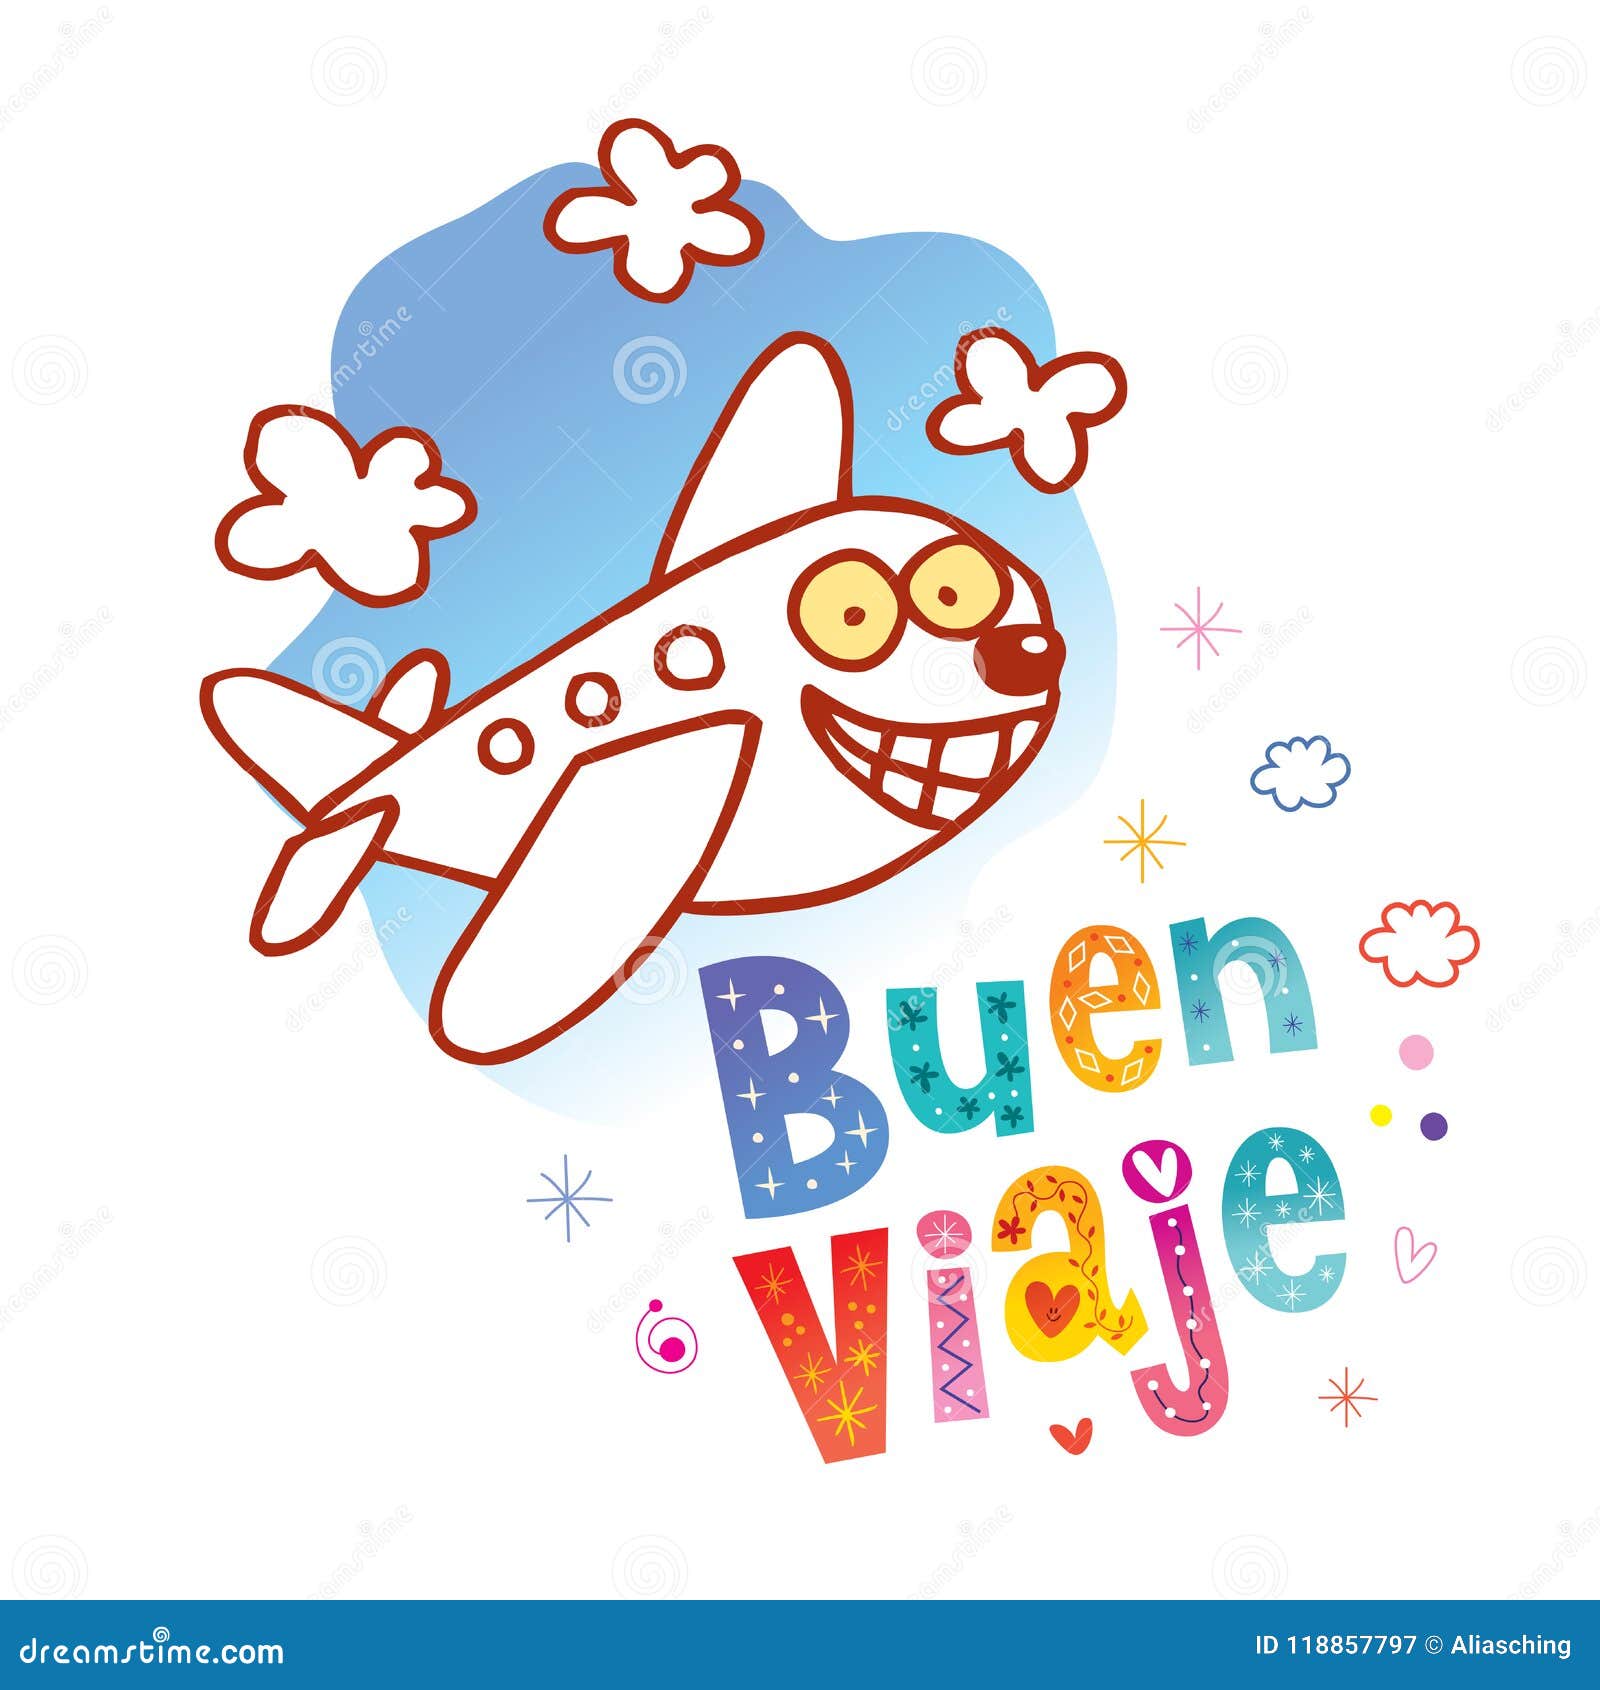 buen viaje - have a nice trip in spanish